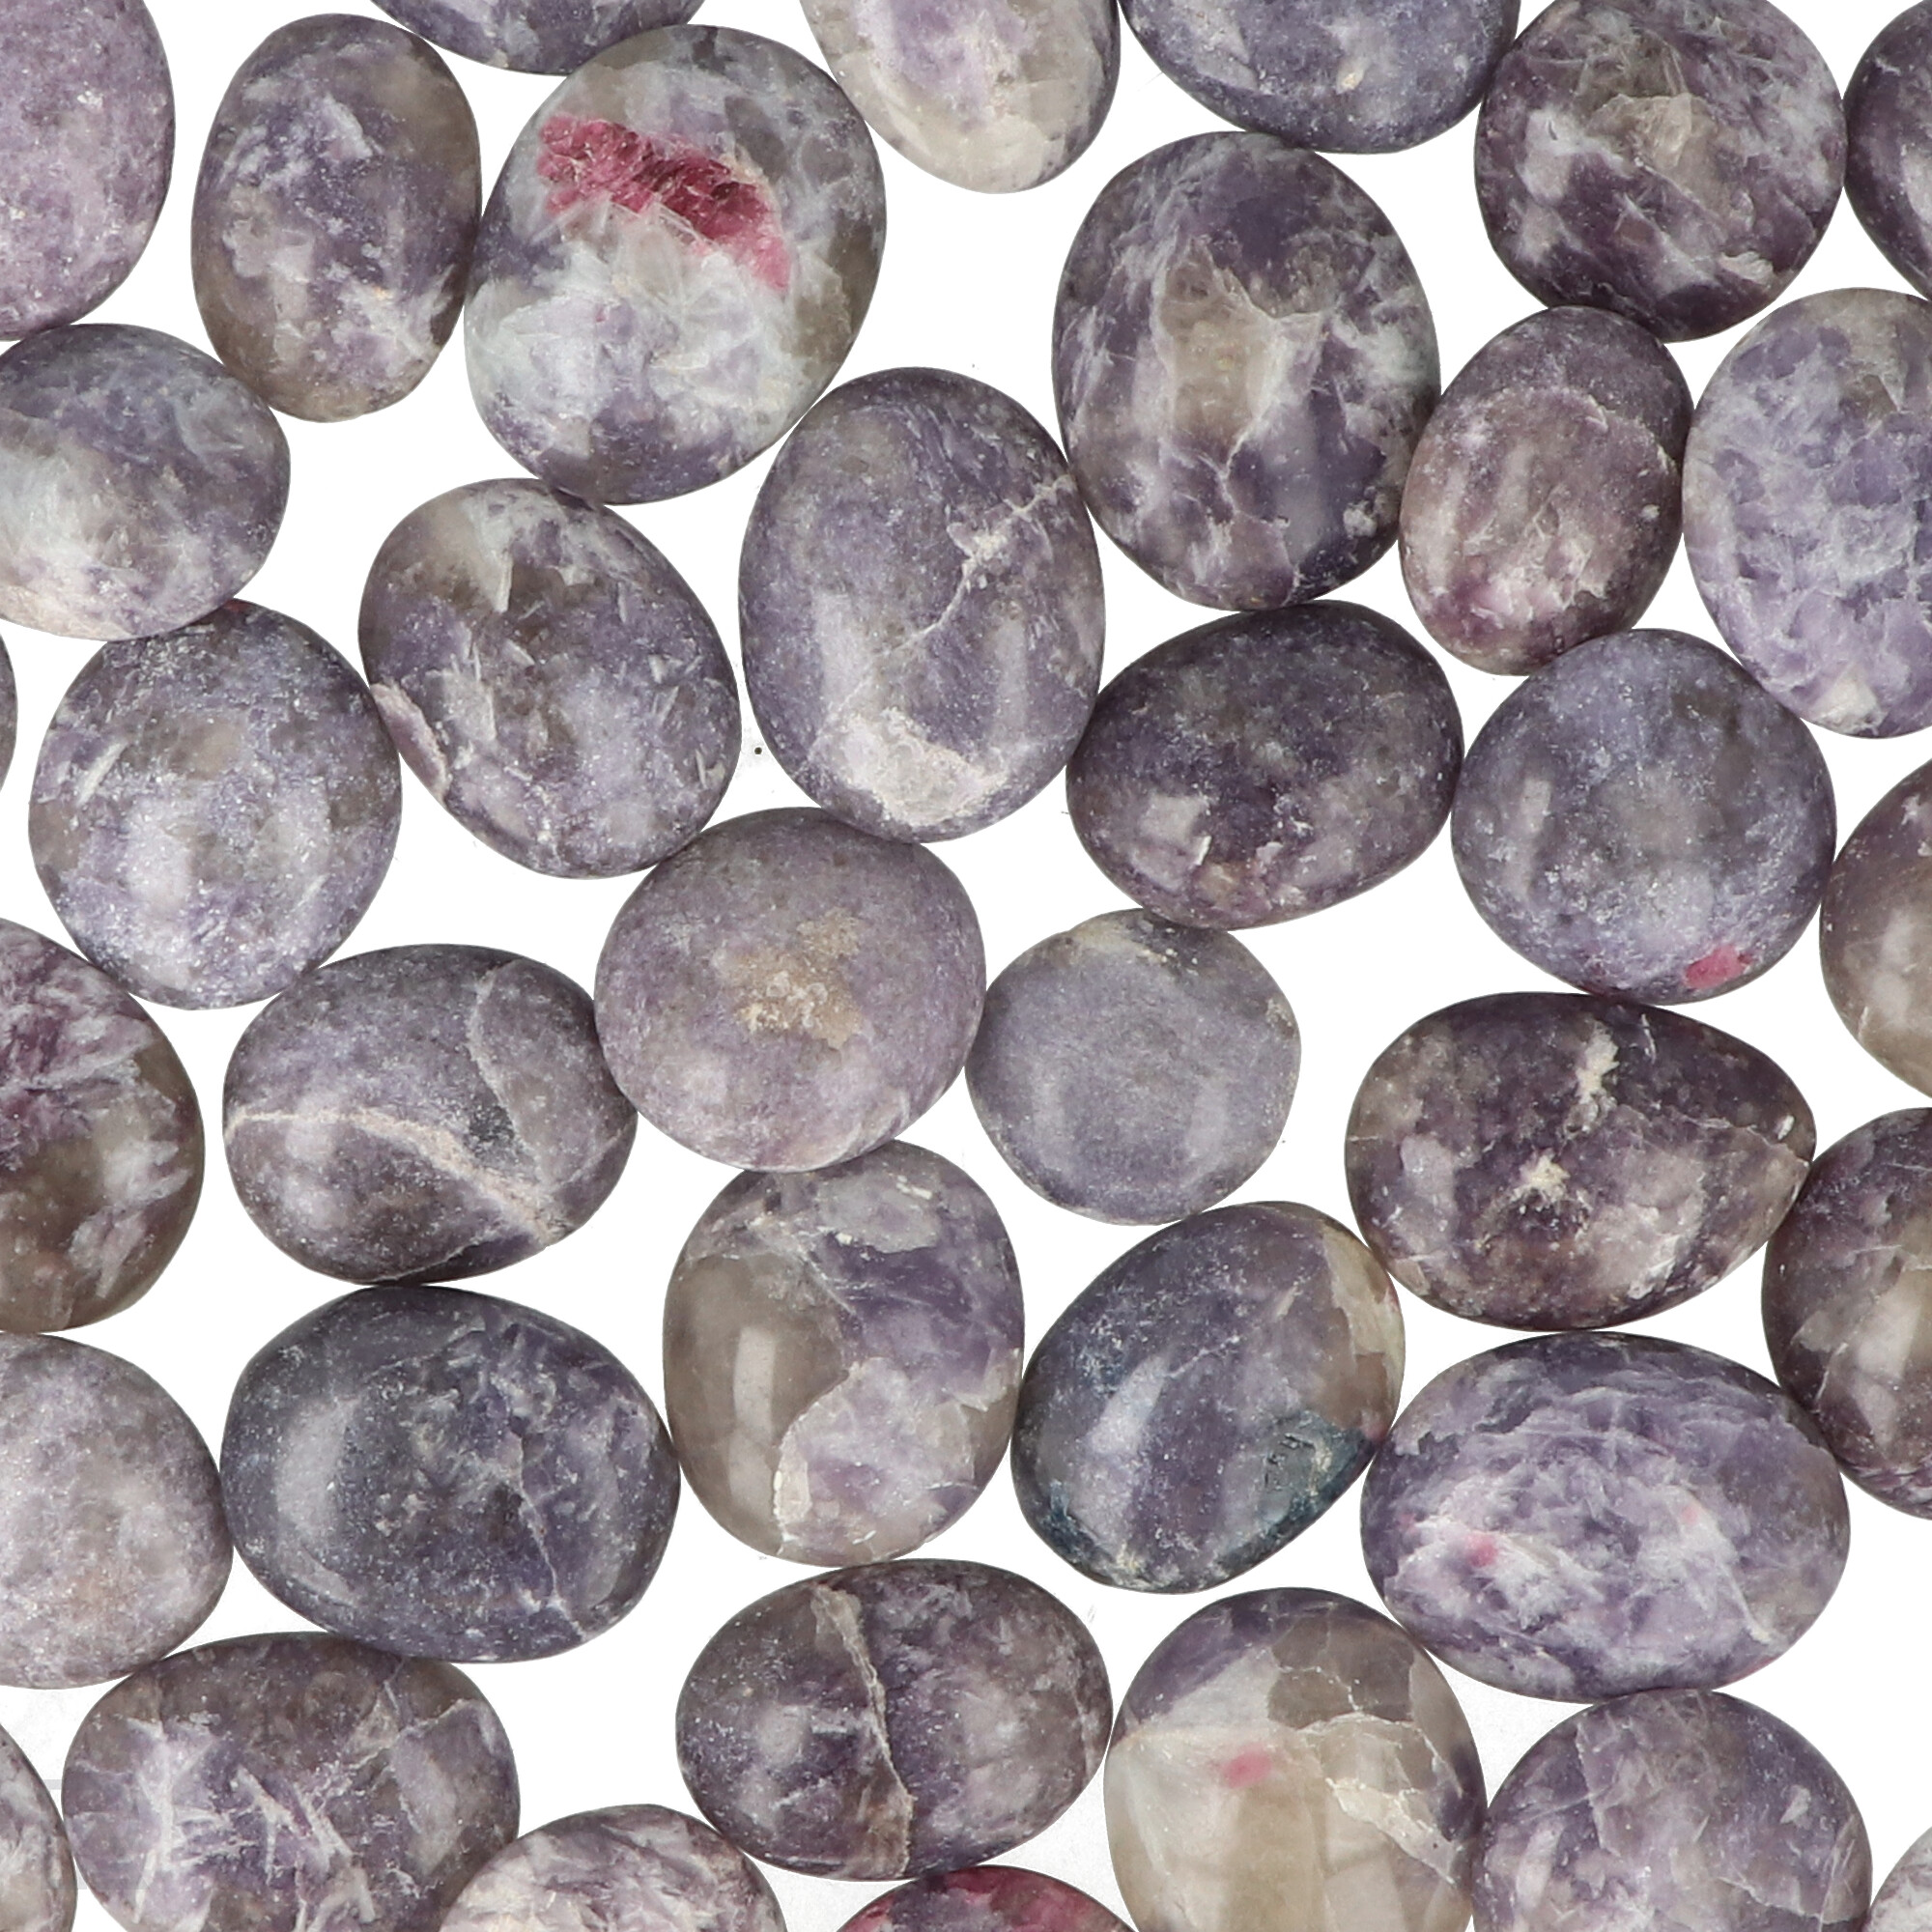 lepidolite-pocket-stones-madagascar-zoom